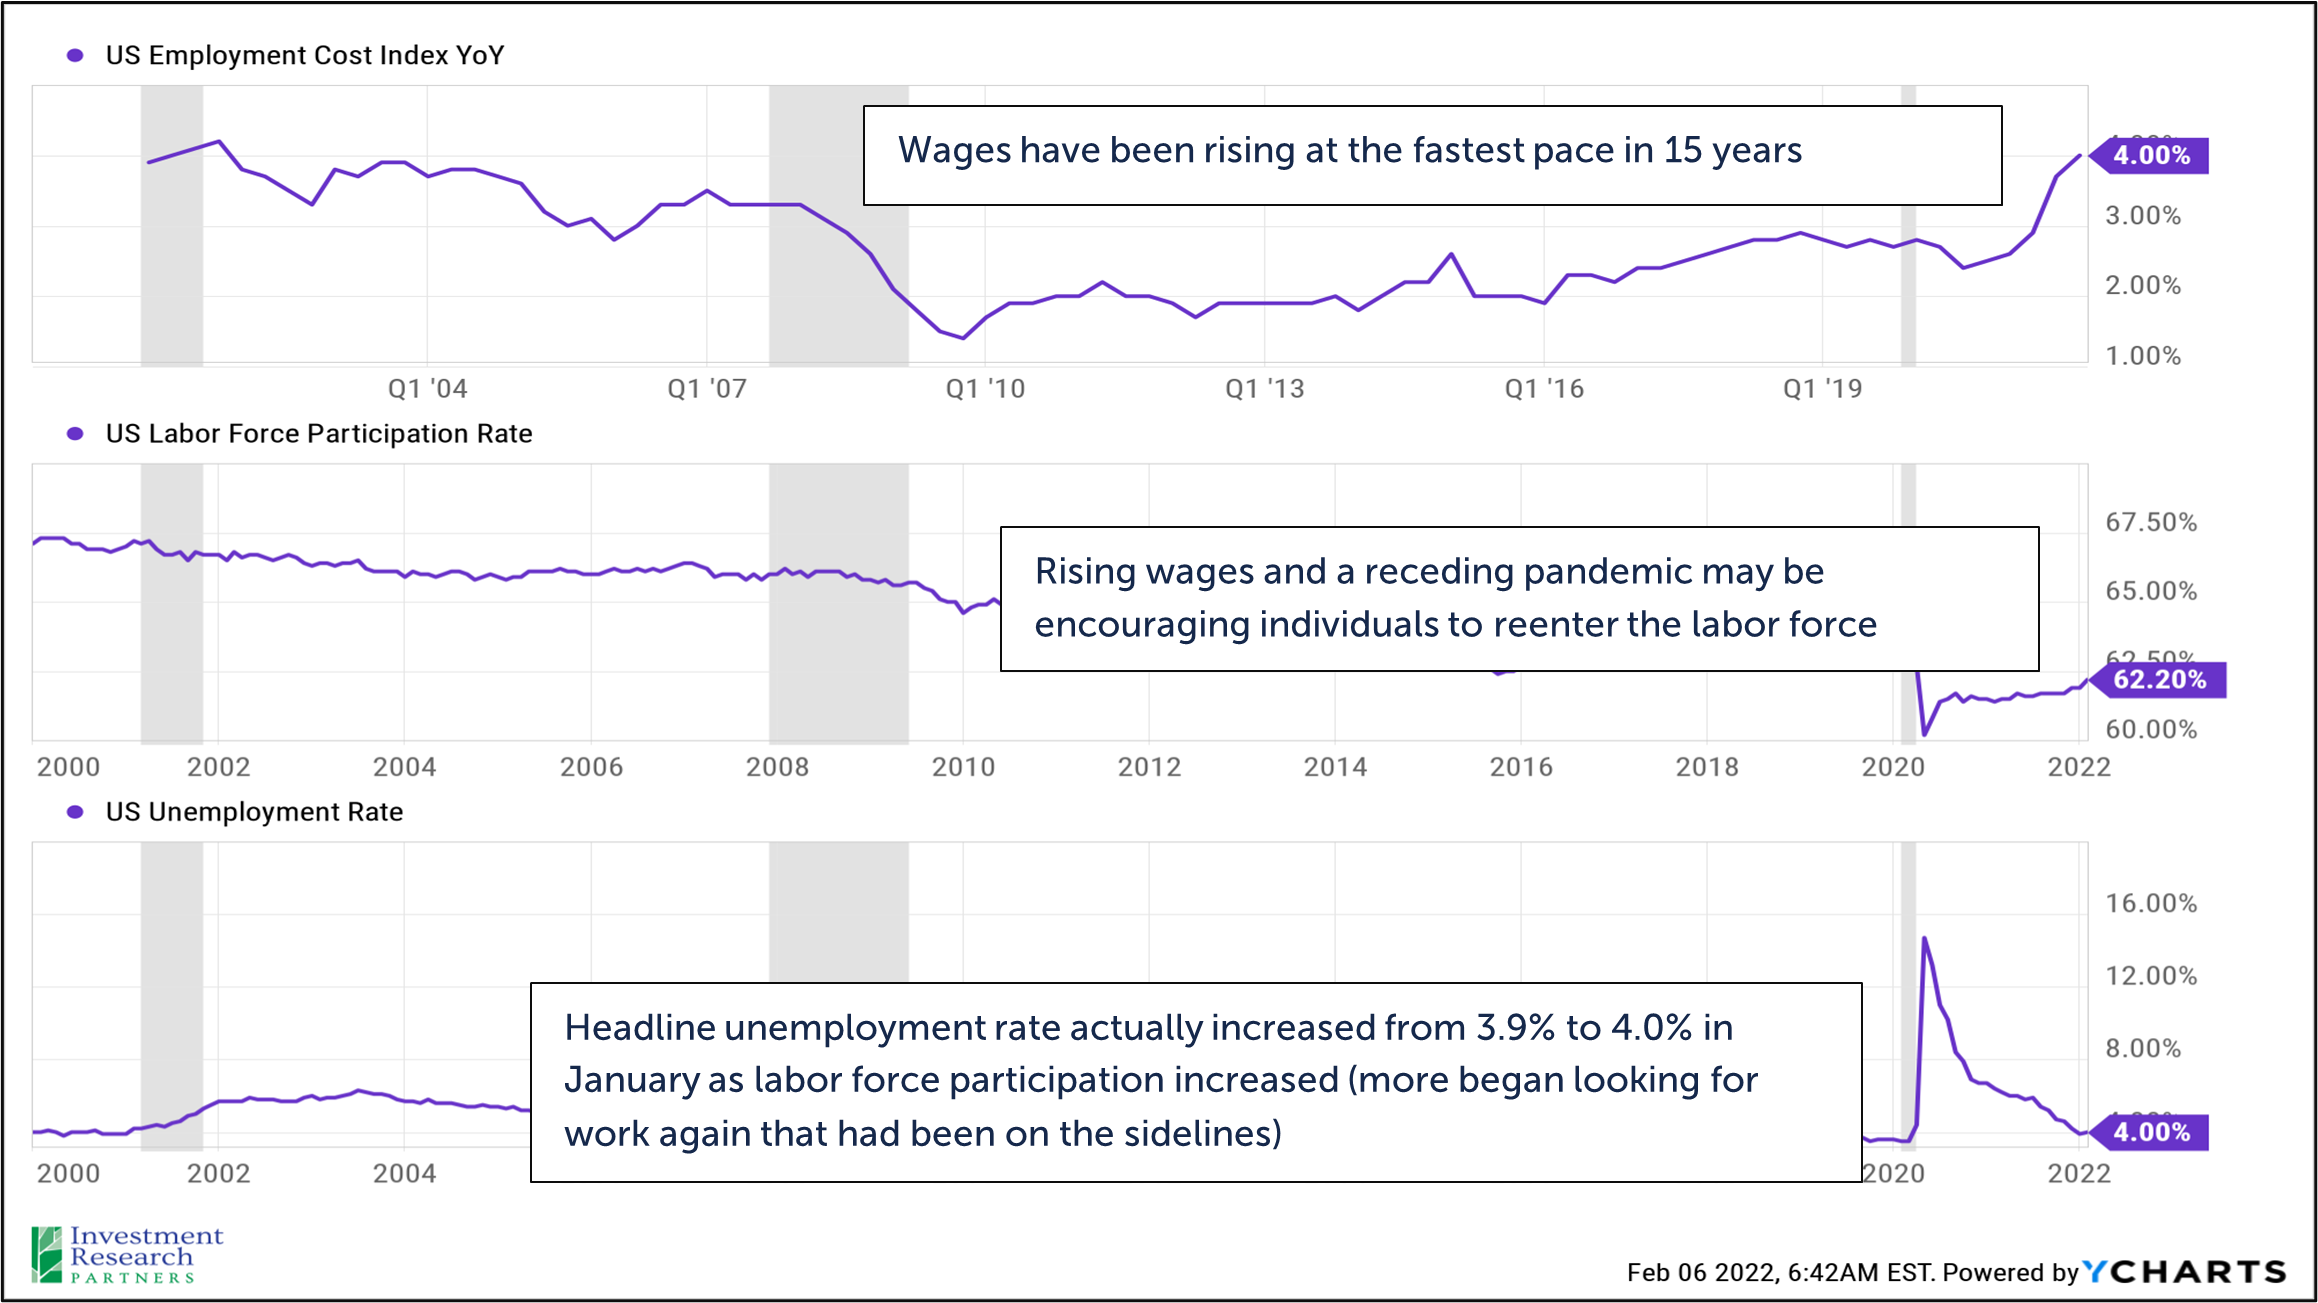 Line graphs depicting US Unemployment Cost Index YoY, US Labor Force Participation Rate, and US Unemployment Rate